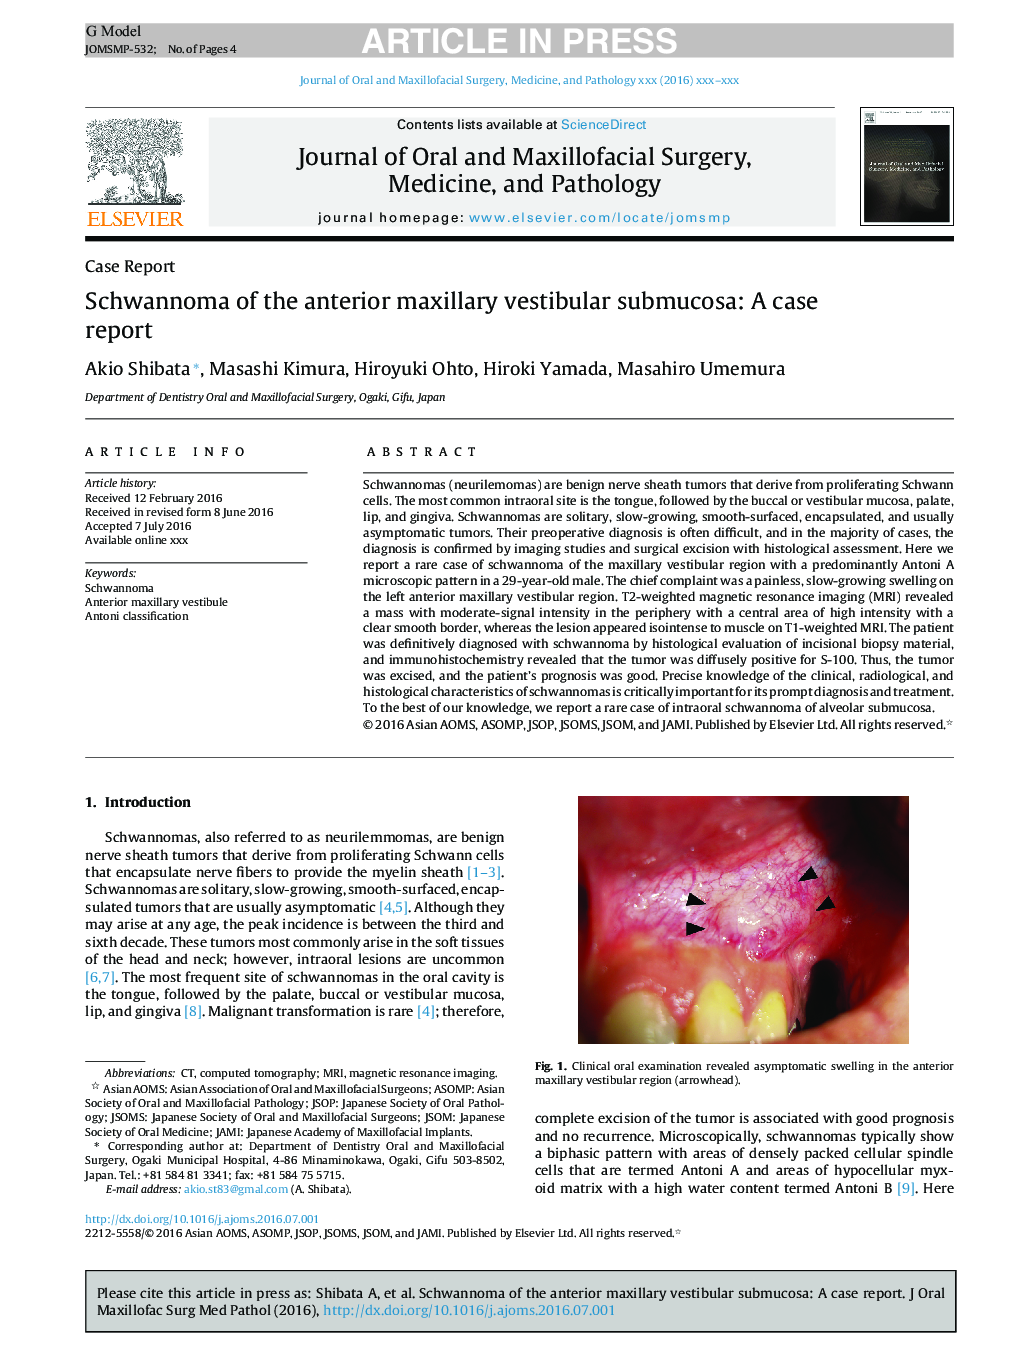 Schwannoma of the anterior maxillary vestibular submucosa: A case report